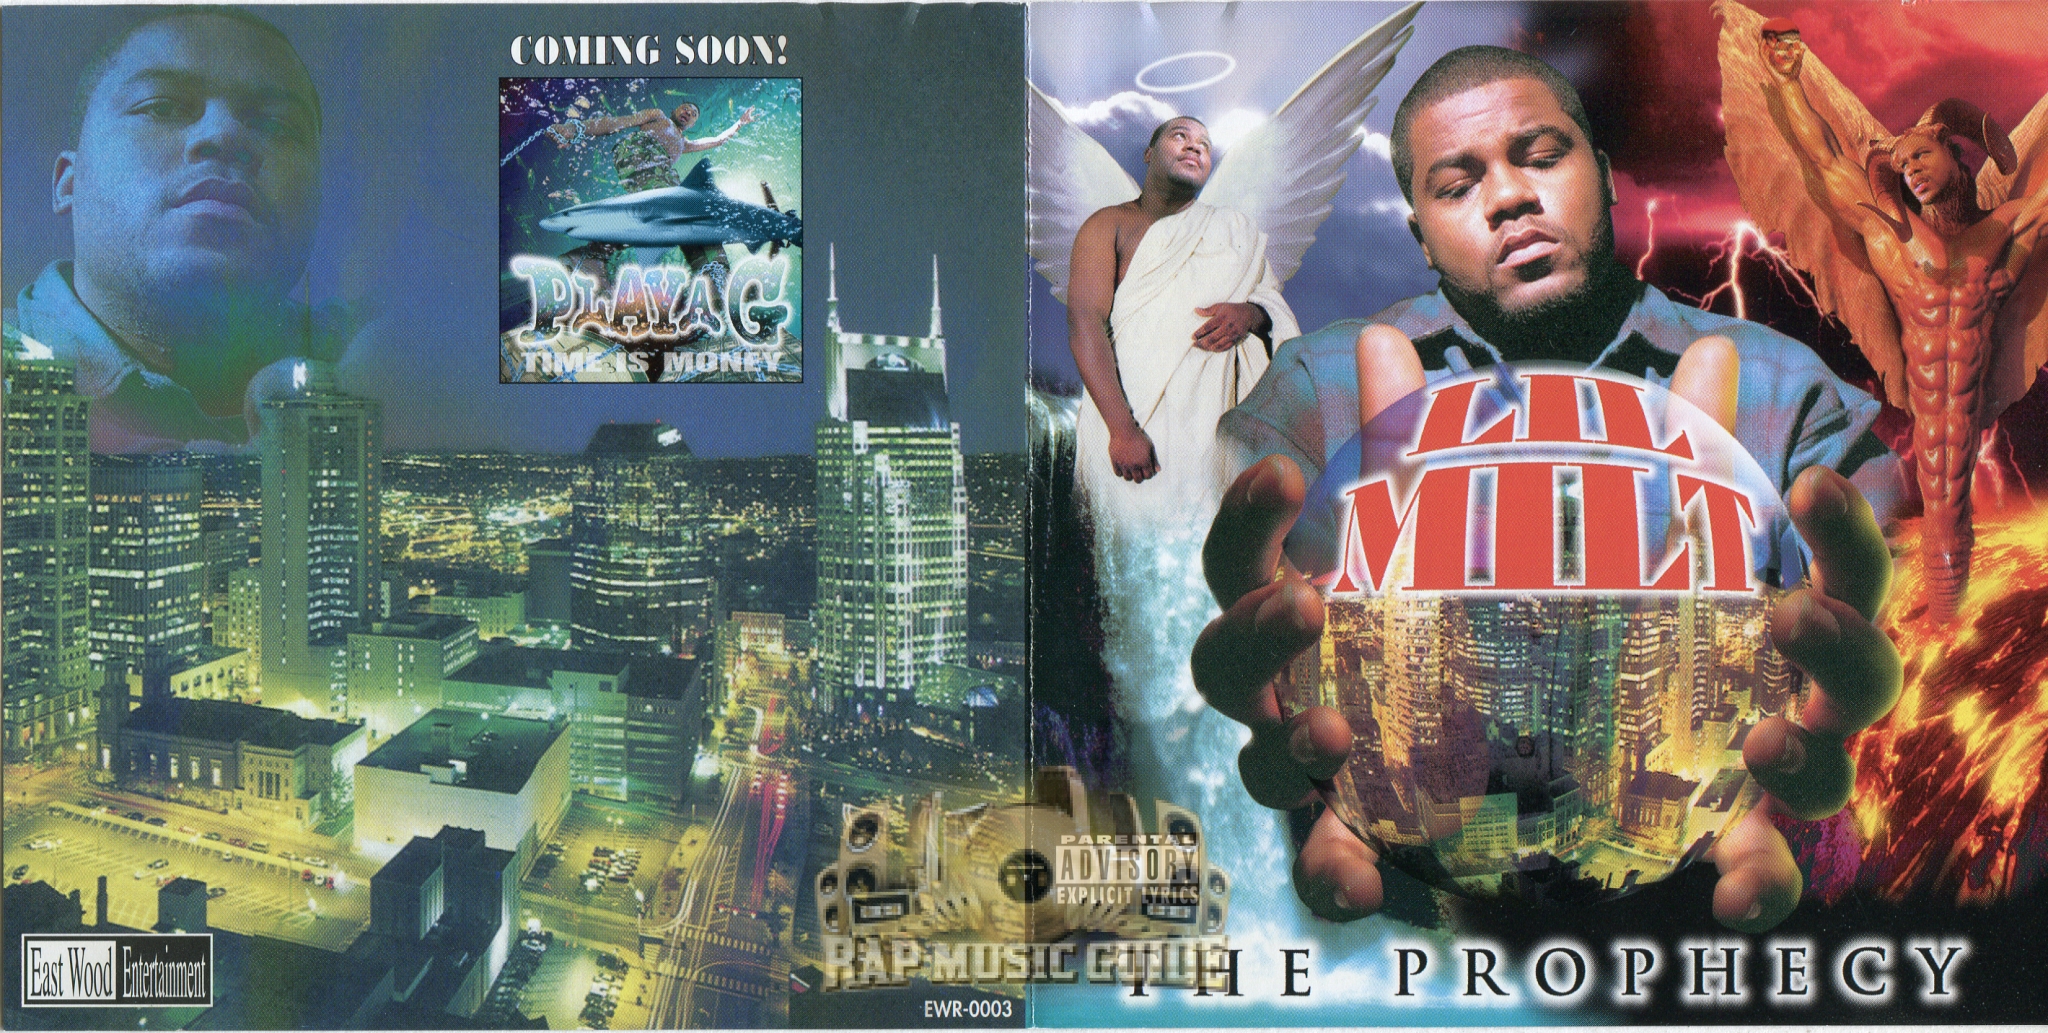 Lil Milt - The Prophecy: CD | Rap Music Guide